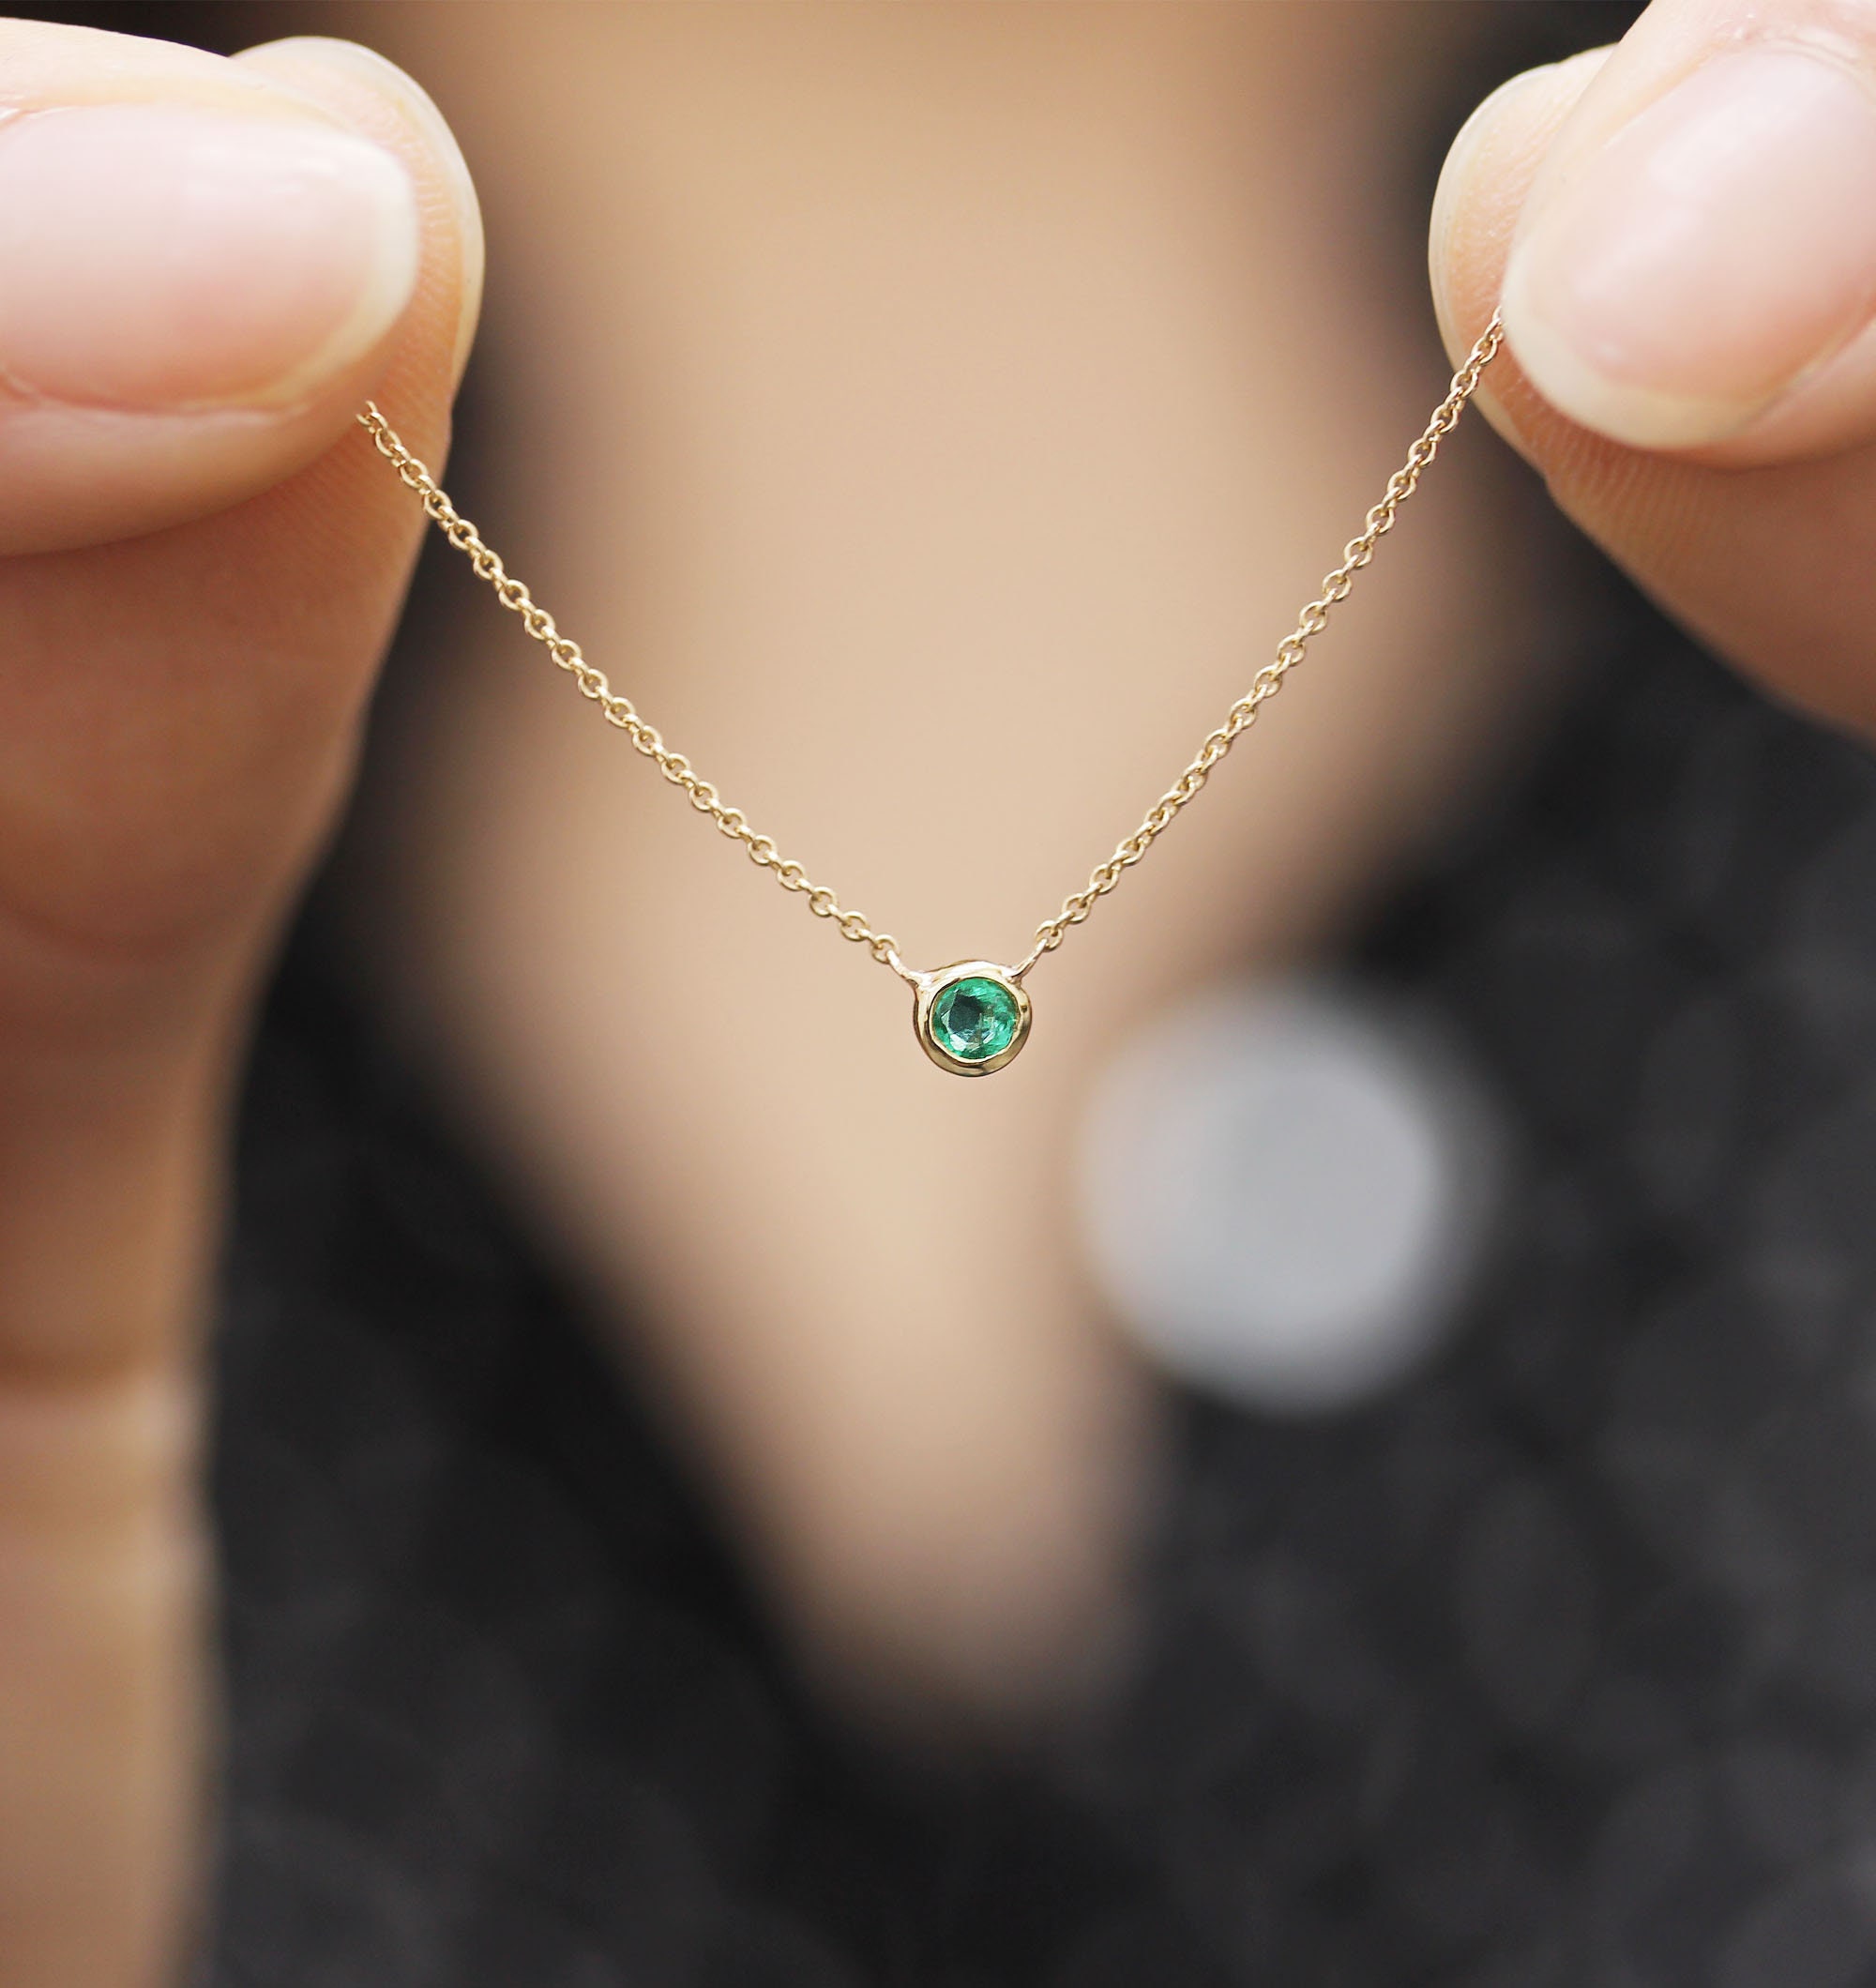 18ct White Gold Diamond Halo Pendant with Emerald Cut Green Peridot